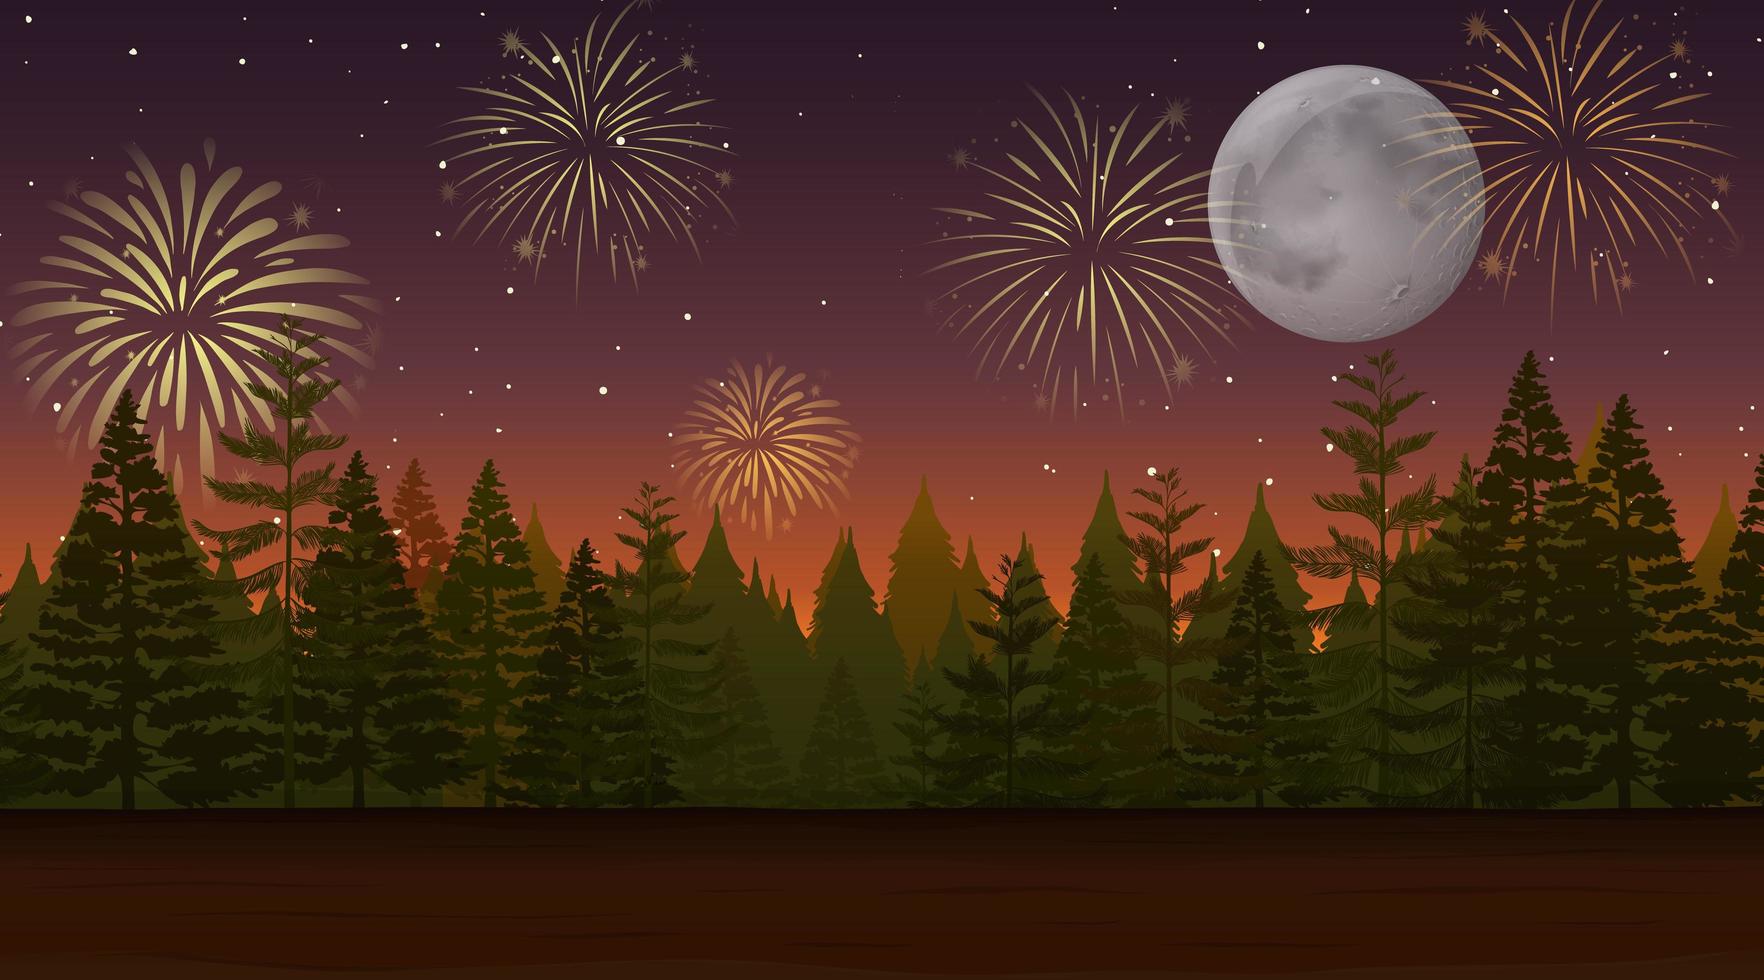 Forest with celebration fireworks scene vector